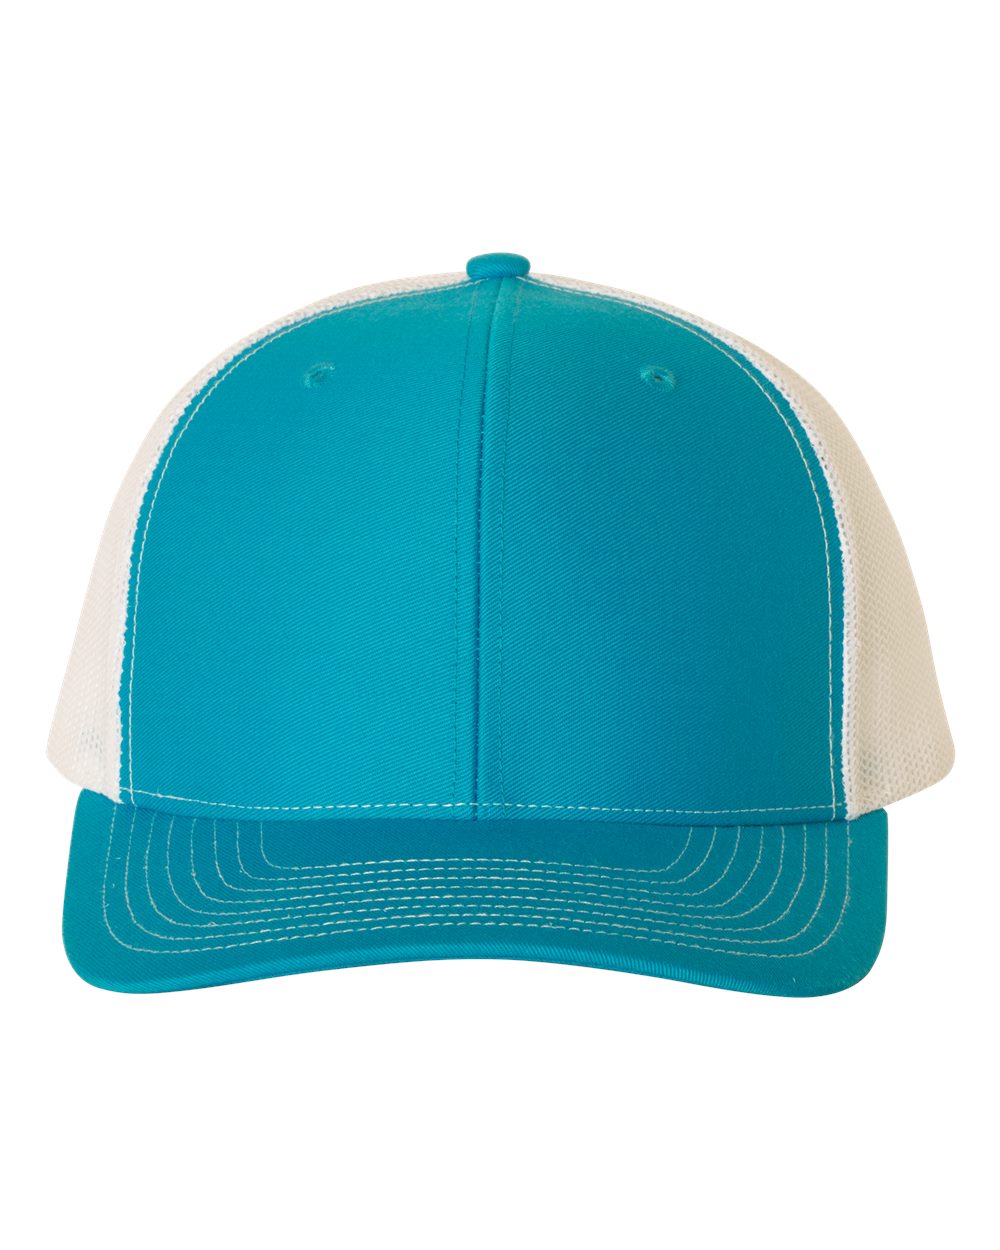 Largemouth Bass Patch Hat, Custom Richardson 112 Leather Patch Hat, Leather Patch Trucker Hat, Fishing Hat, Fish Patch Hat, Bass Hat